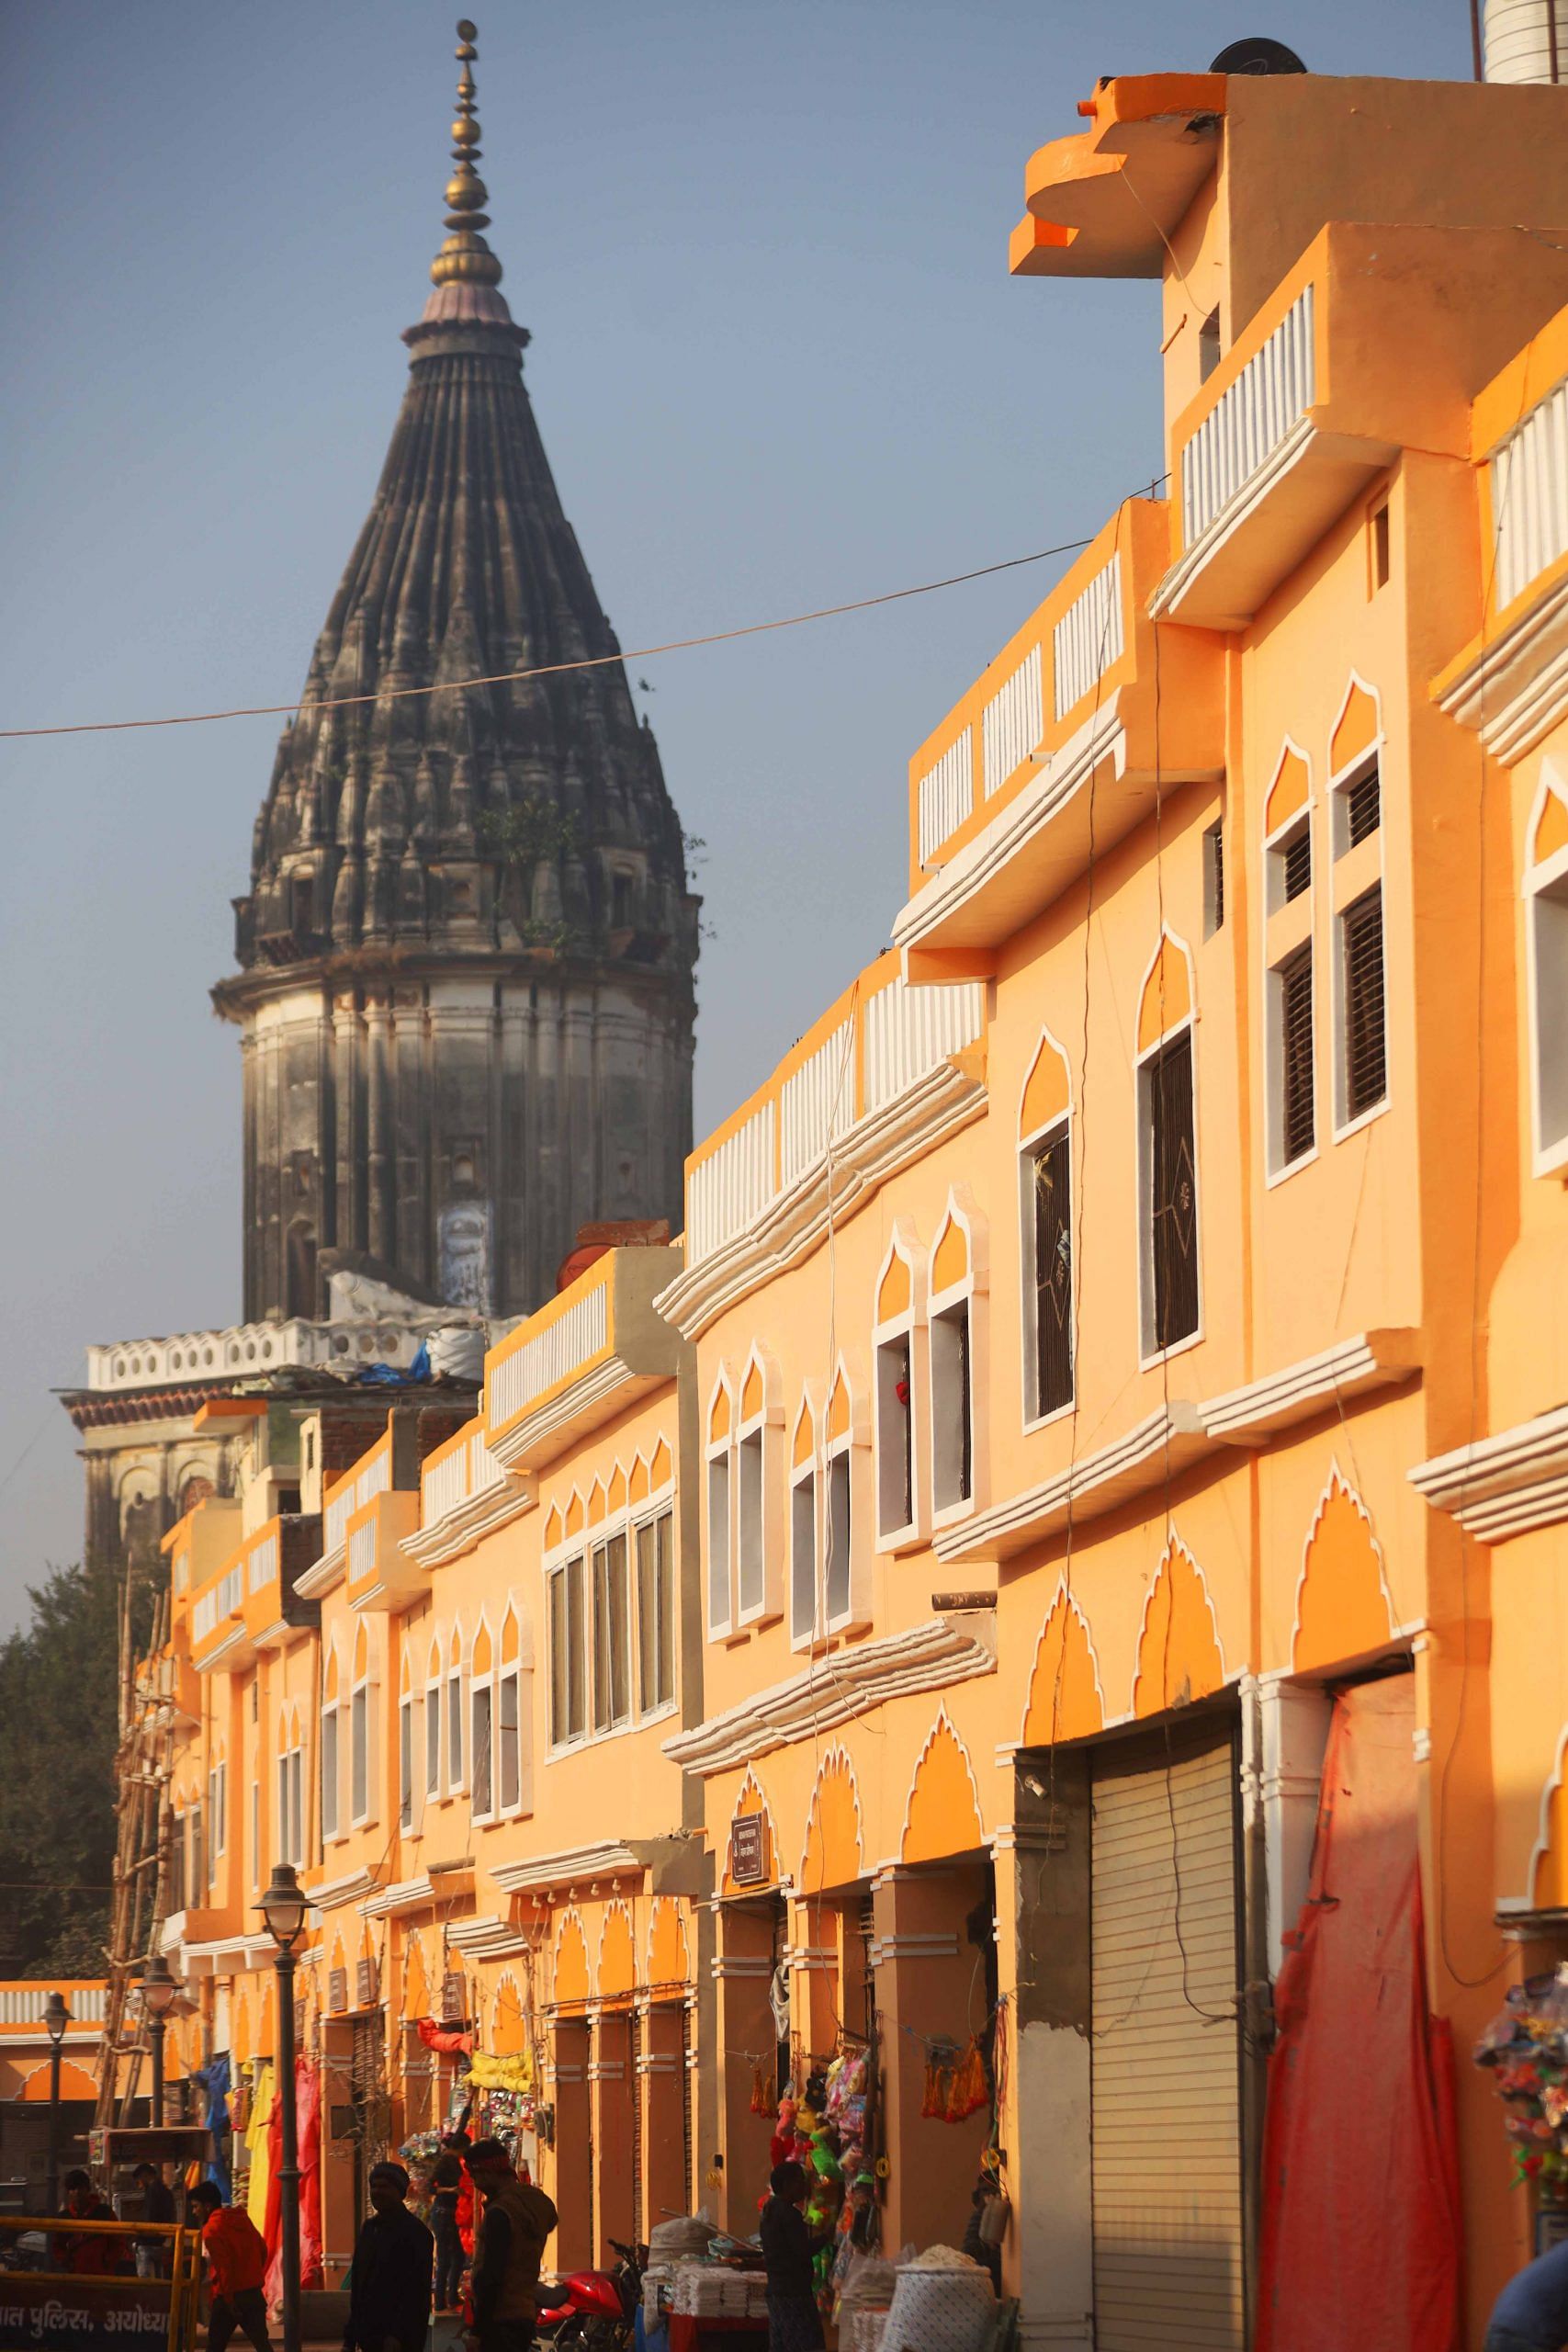 The shops on Bhakti Path, road leading to Hanuman Garhi, have been painted orange | Photo: Manisha Mondal| ThePrint